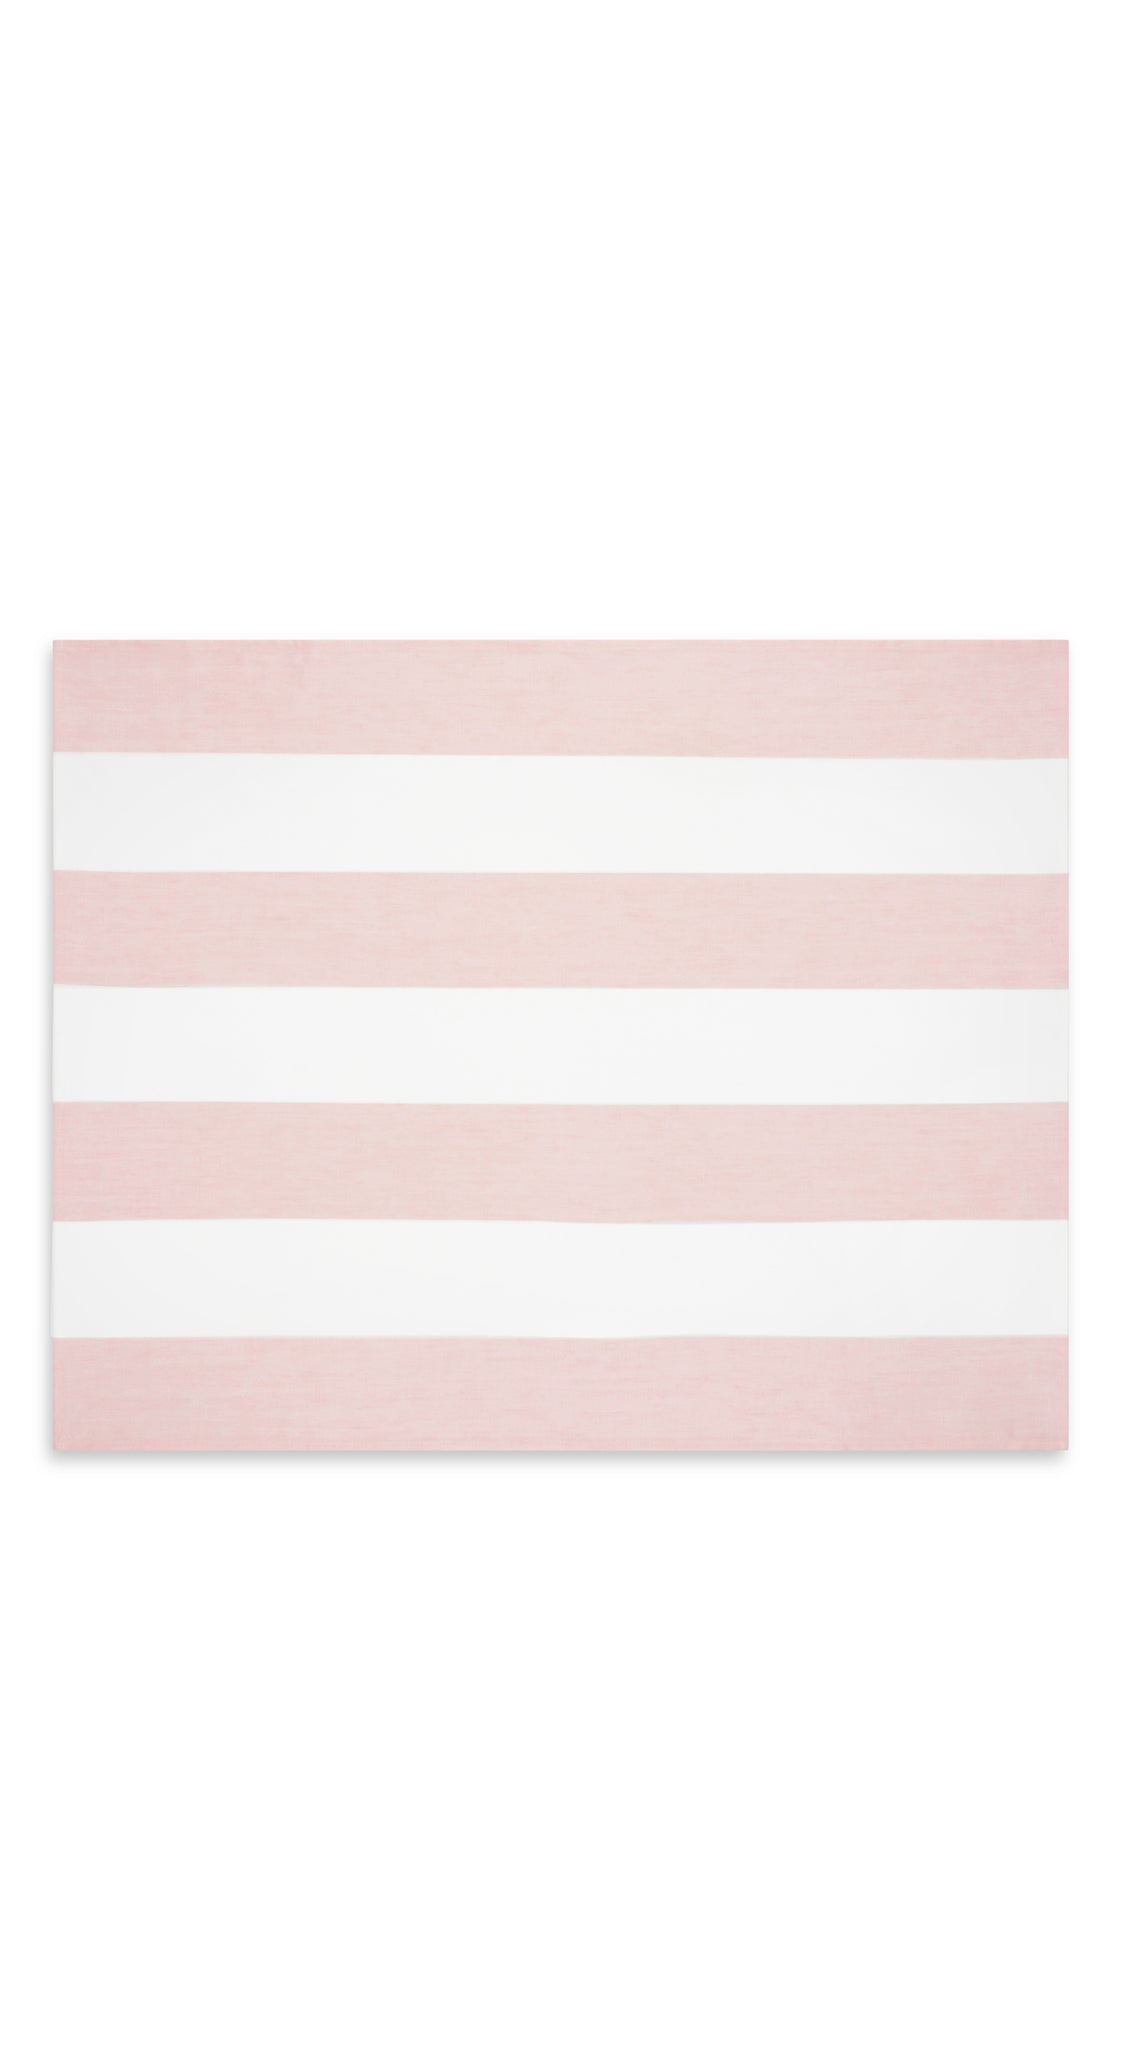 Fine Irish Linen Tea Towel in Pink and White Stripe, 58x73cm